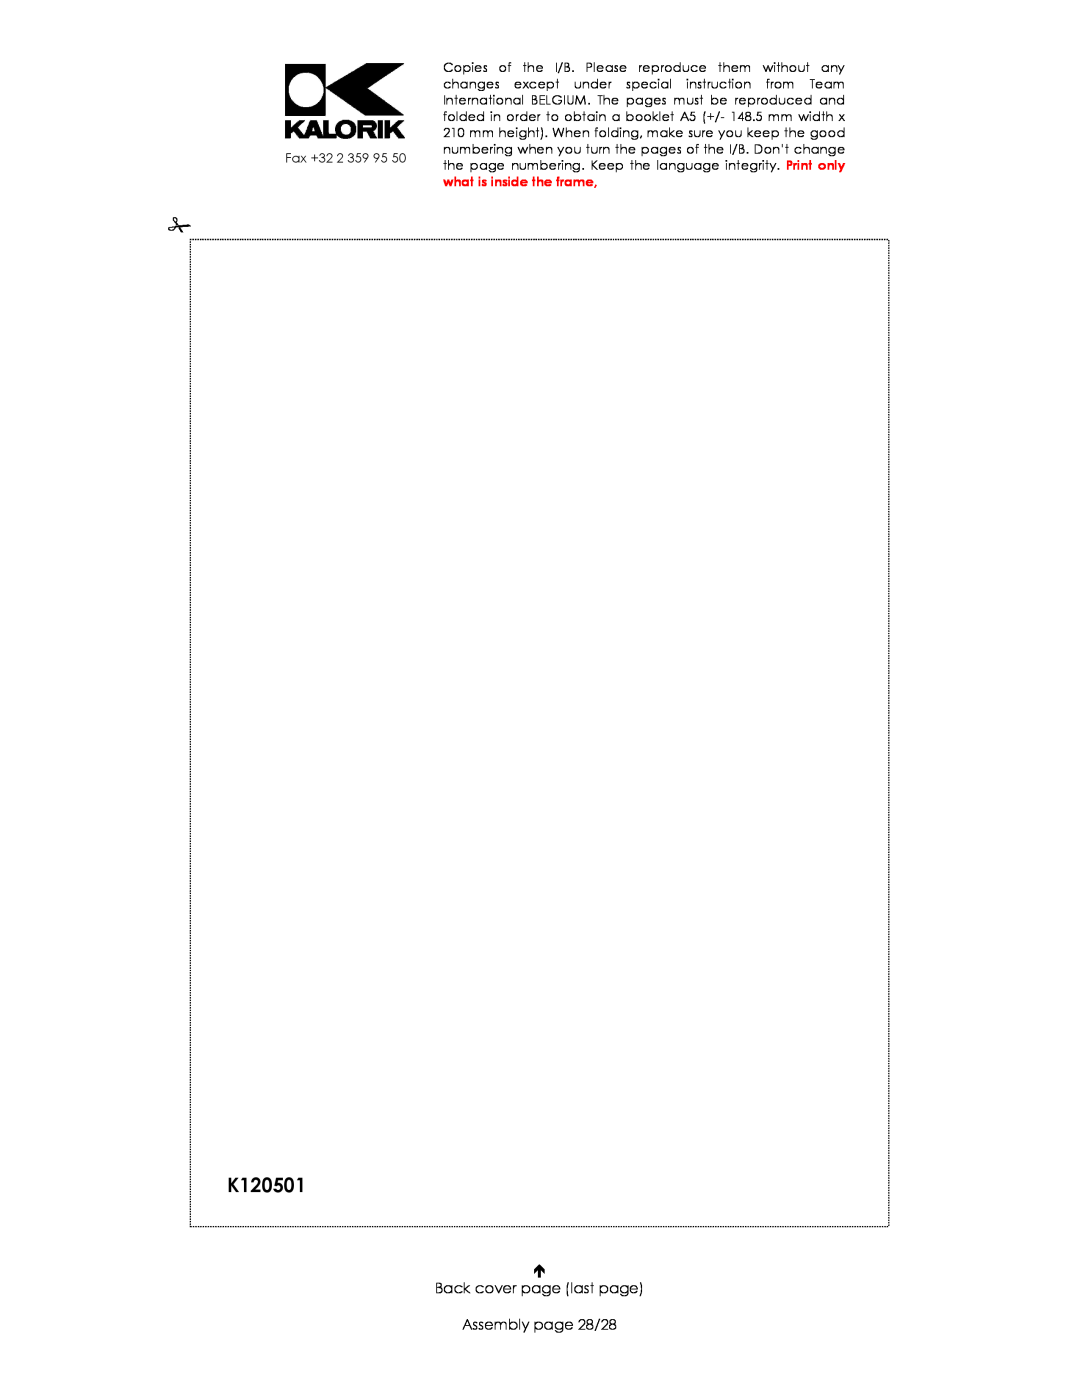 Kalorik 33029, usk bl 16909, 16911 manual K120501, Back cover page last page Assembly page 28/28 